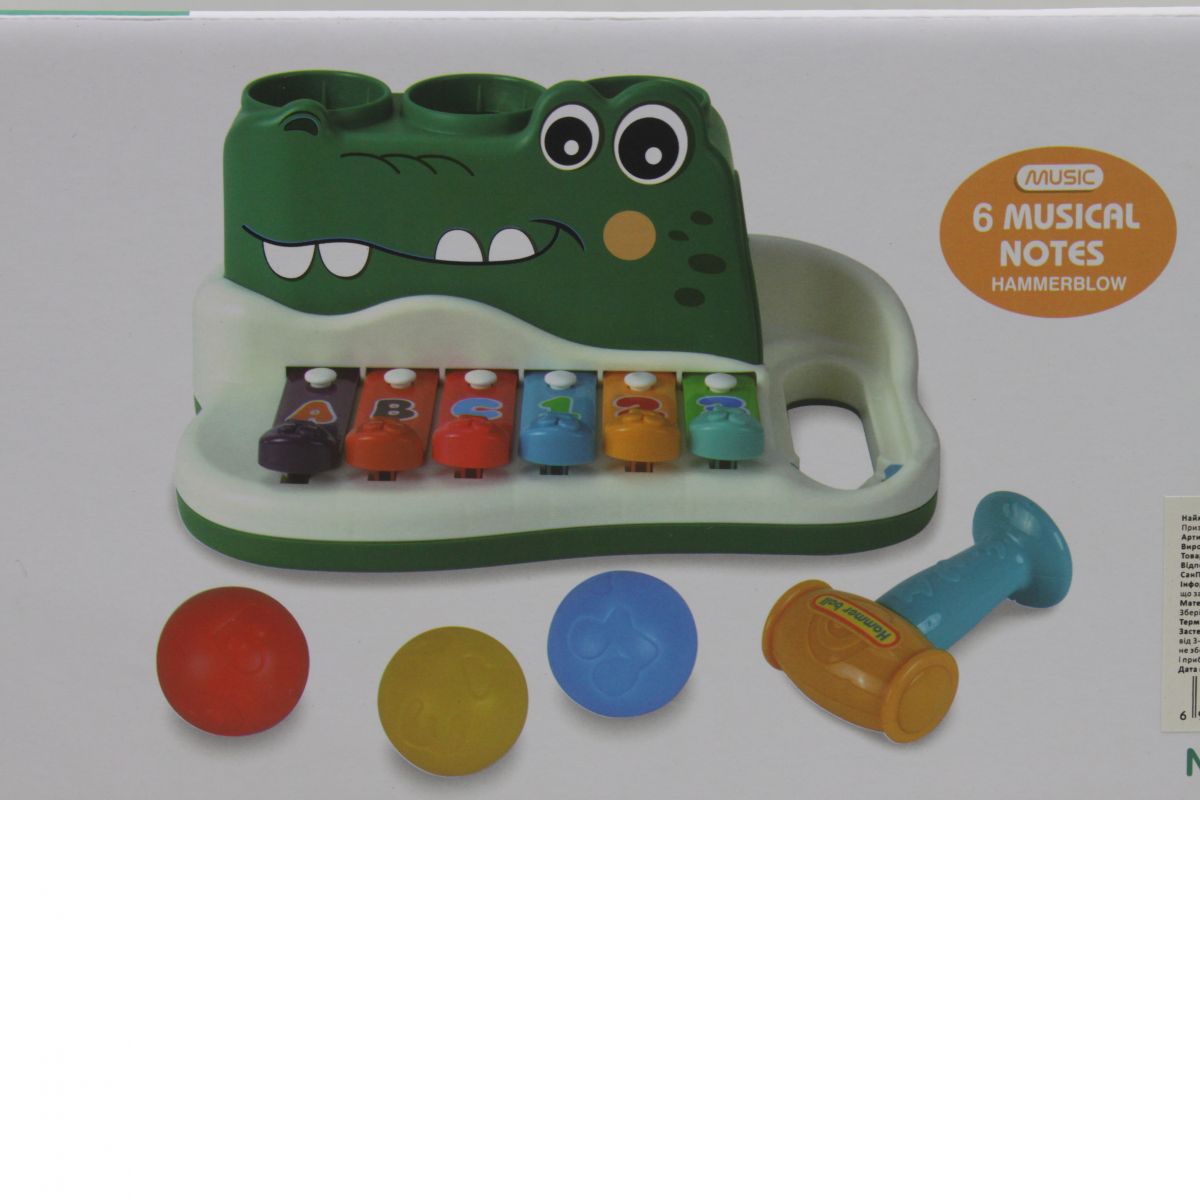 Музична іграшка "Ксилофон-крокодил"